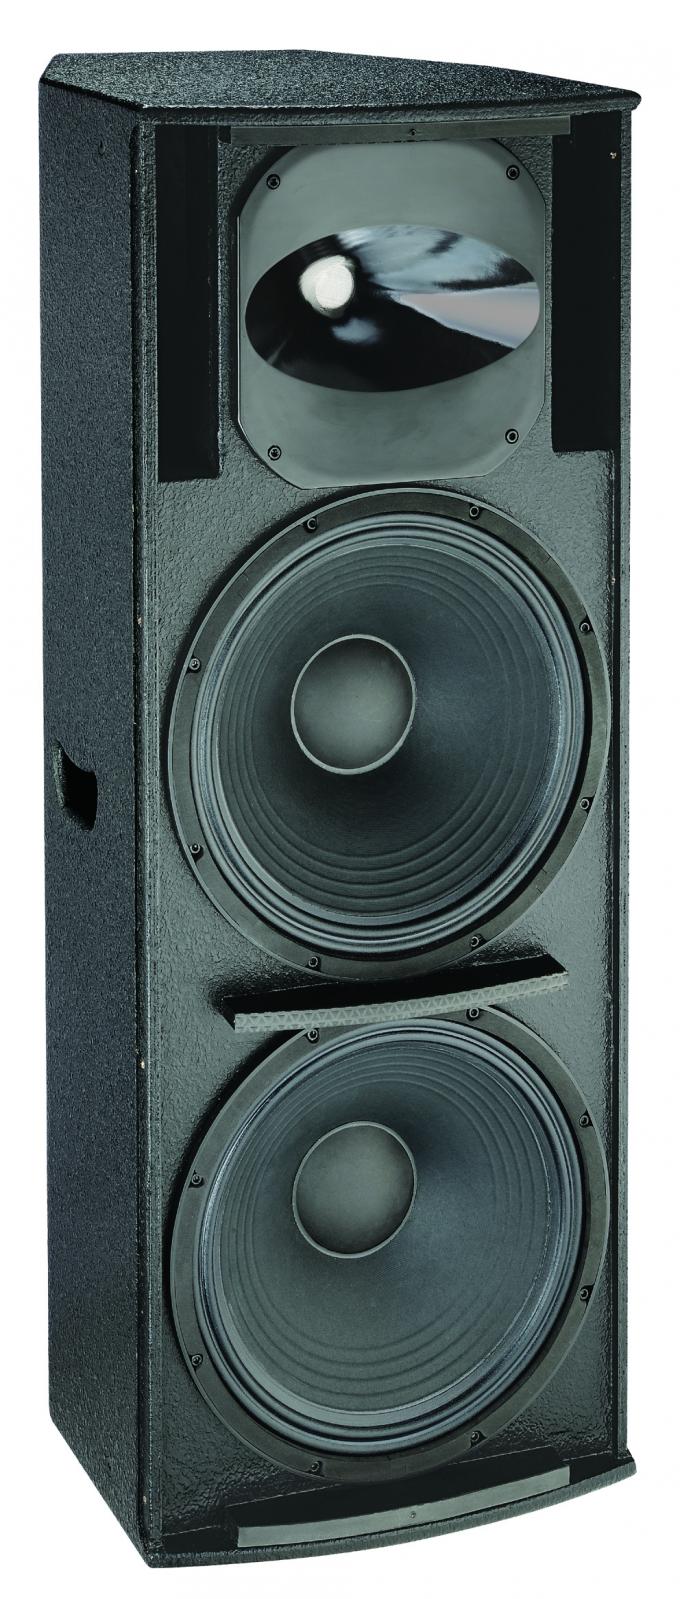 Sistema de som baixo audio do orador do equipamento do DJ da fase para o karaoke